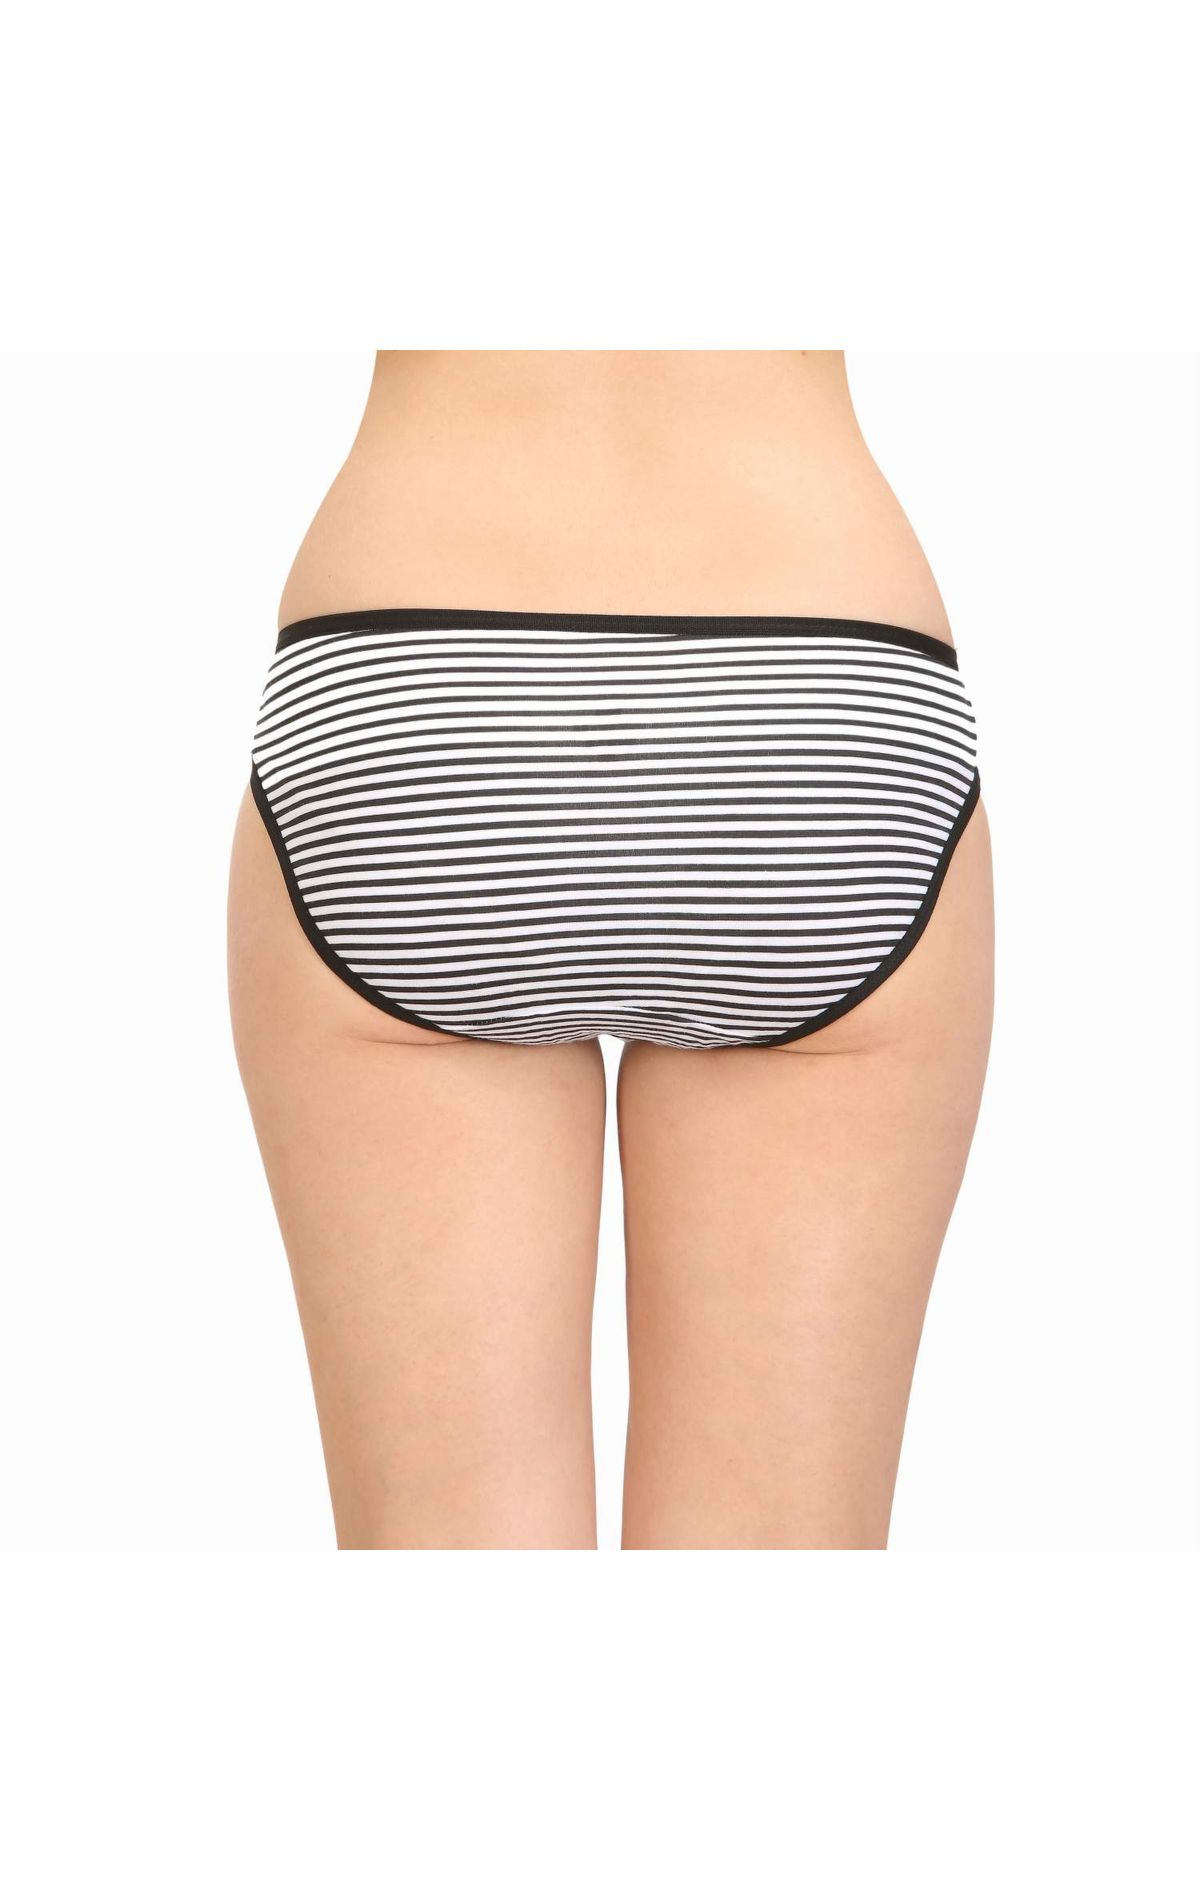 Bodycare Womens Combed Cotton Assorted Striped Bikini Briefs-Pack